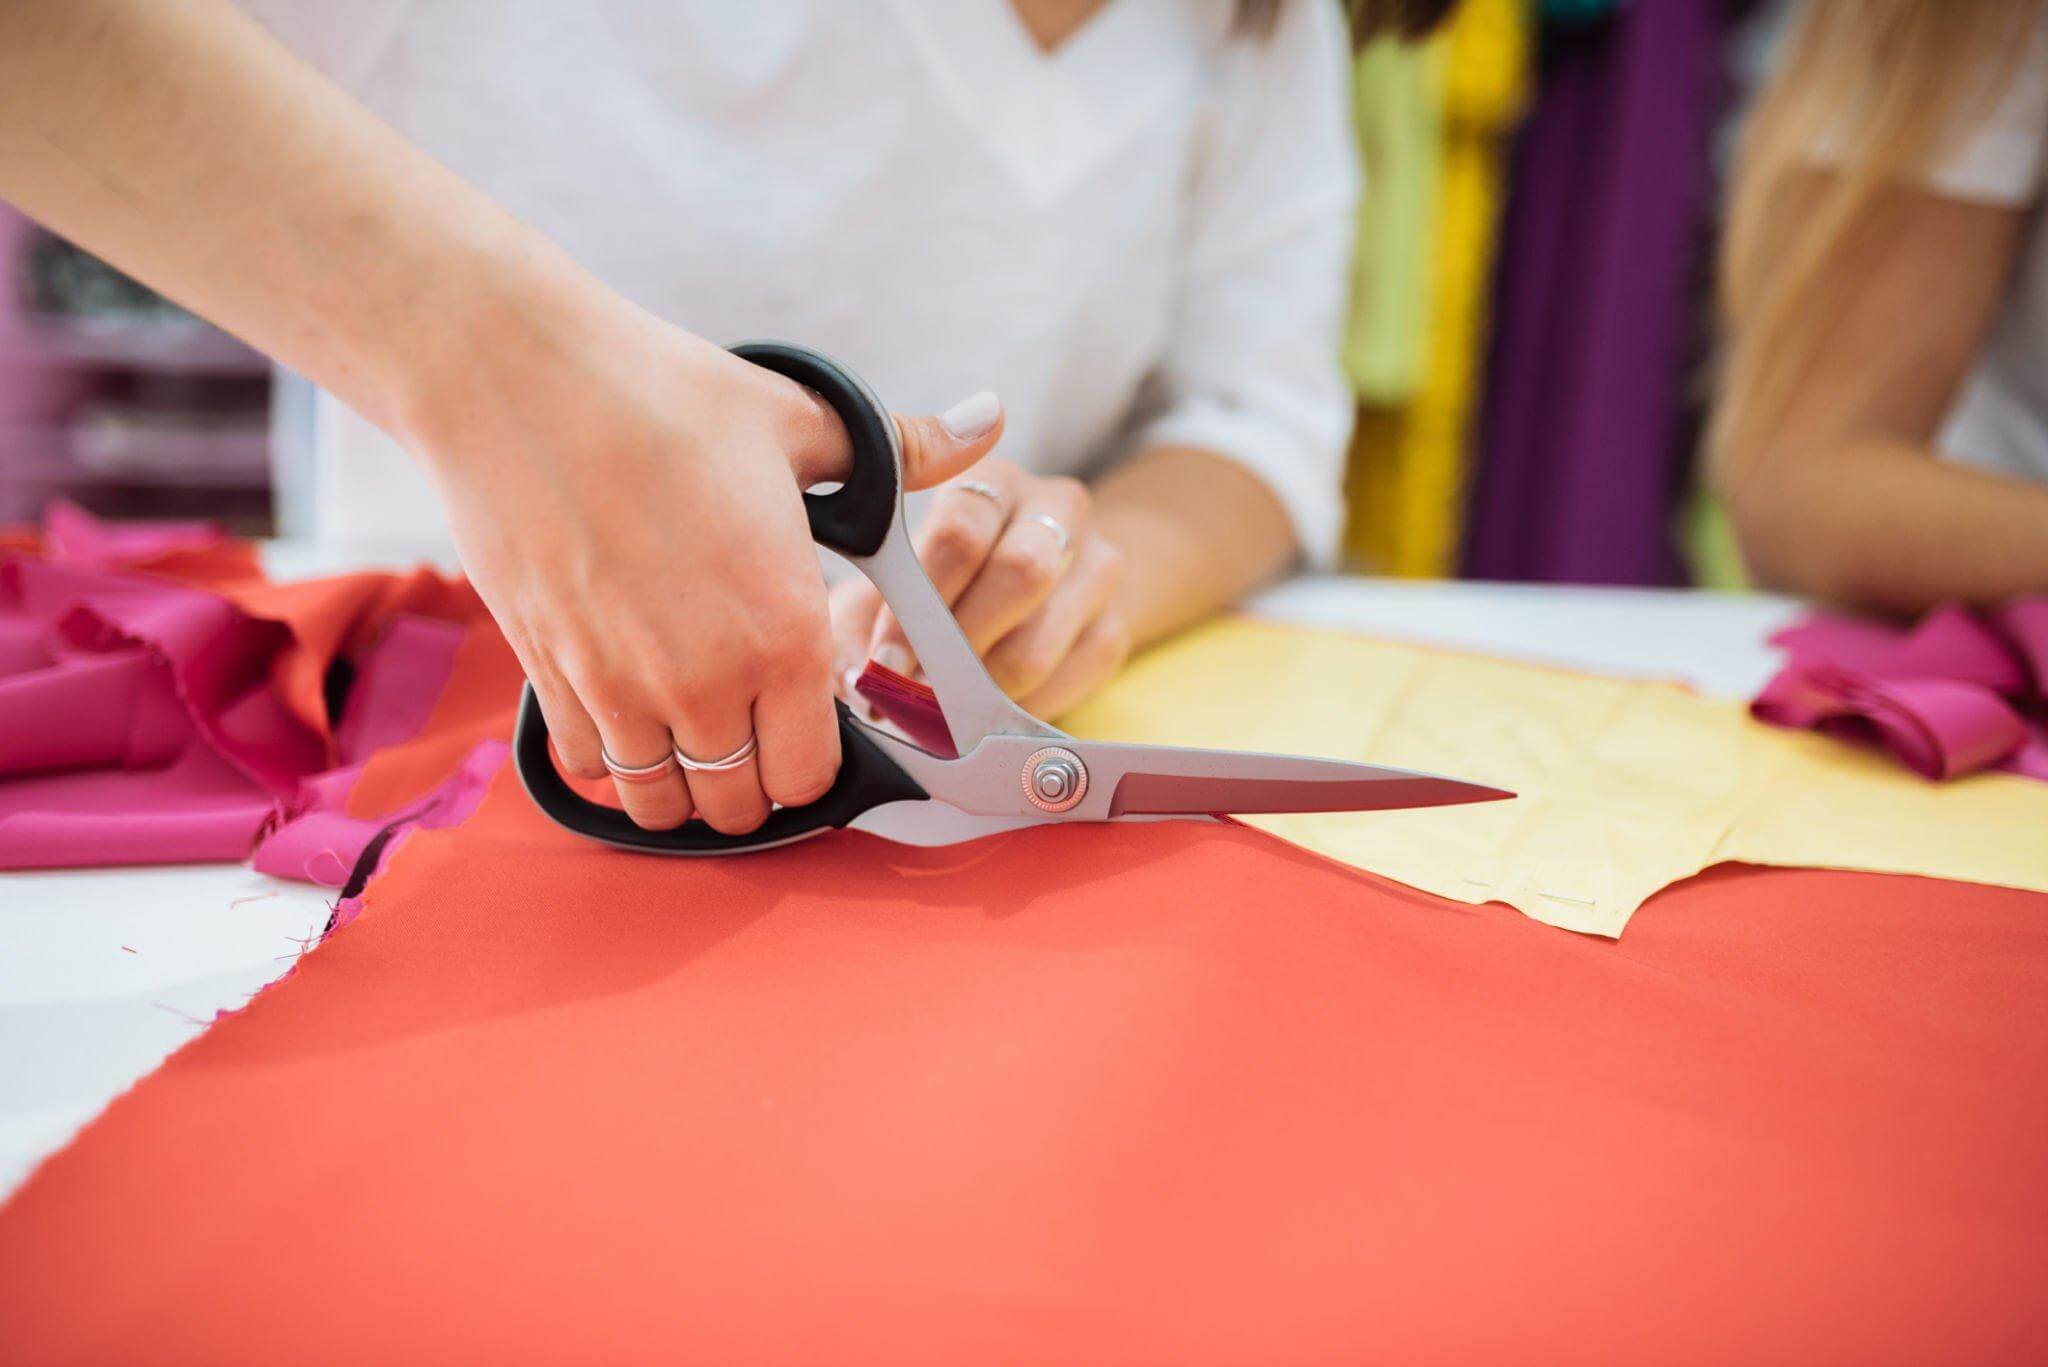 Method of Pattern Making - Textiles and Dress Designing